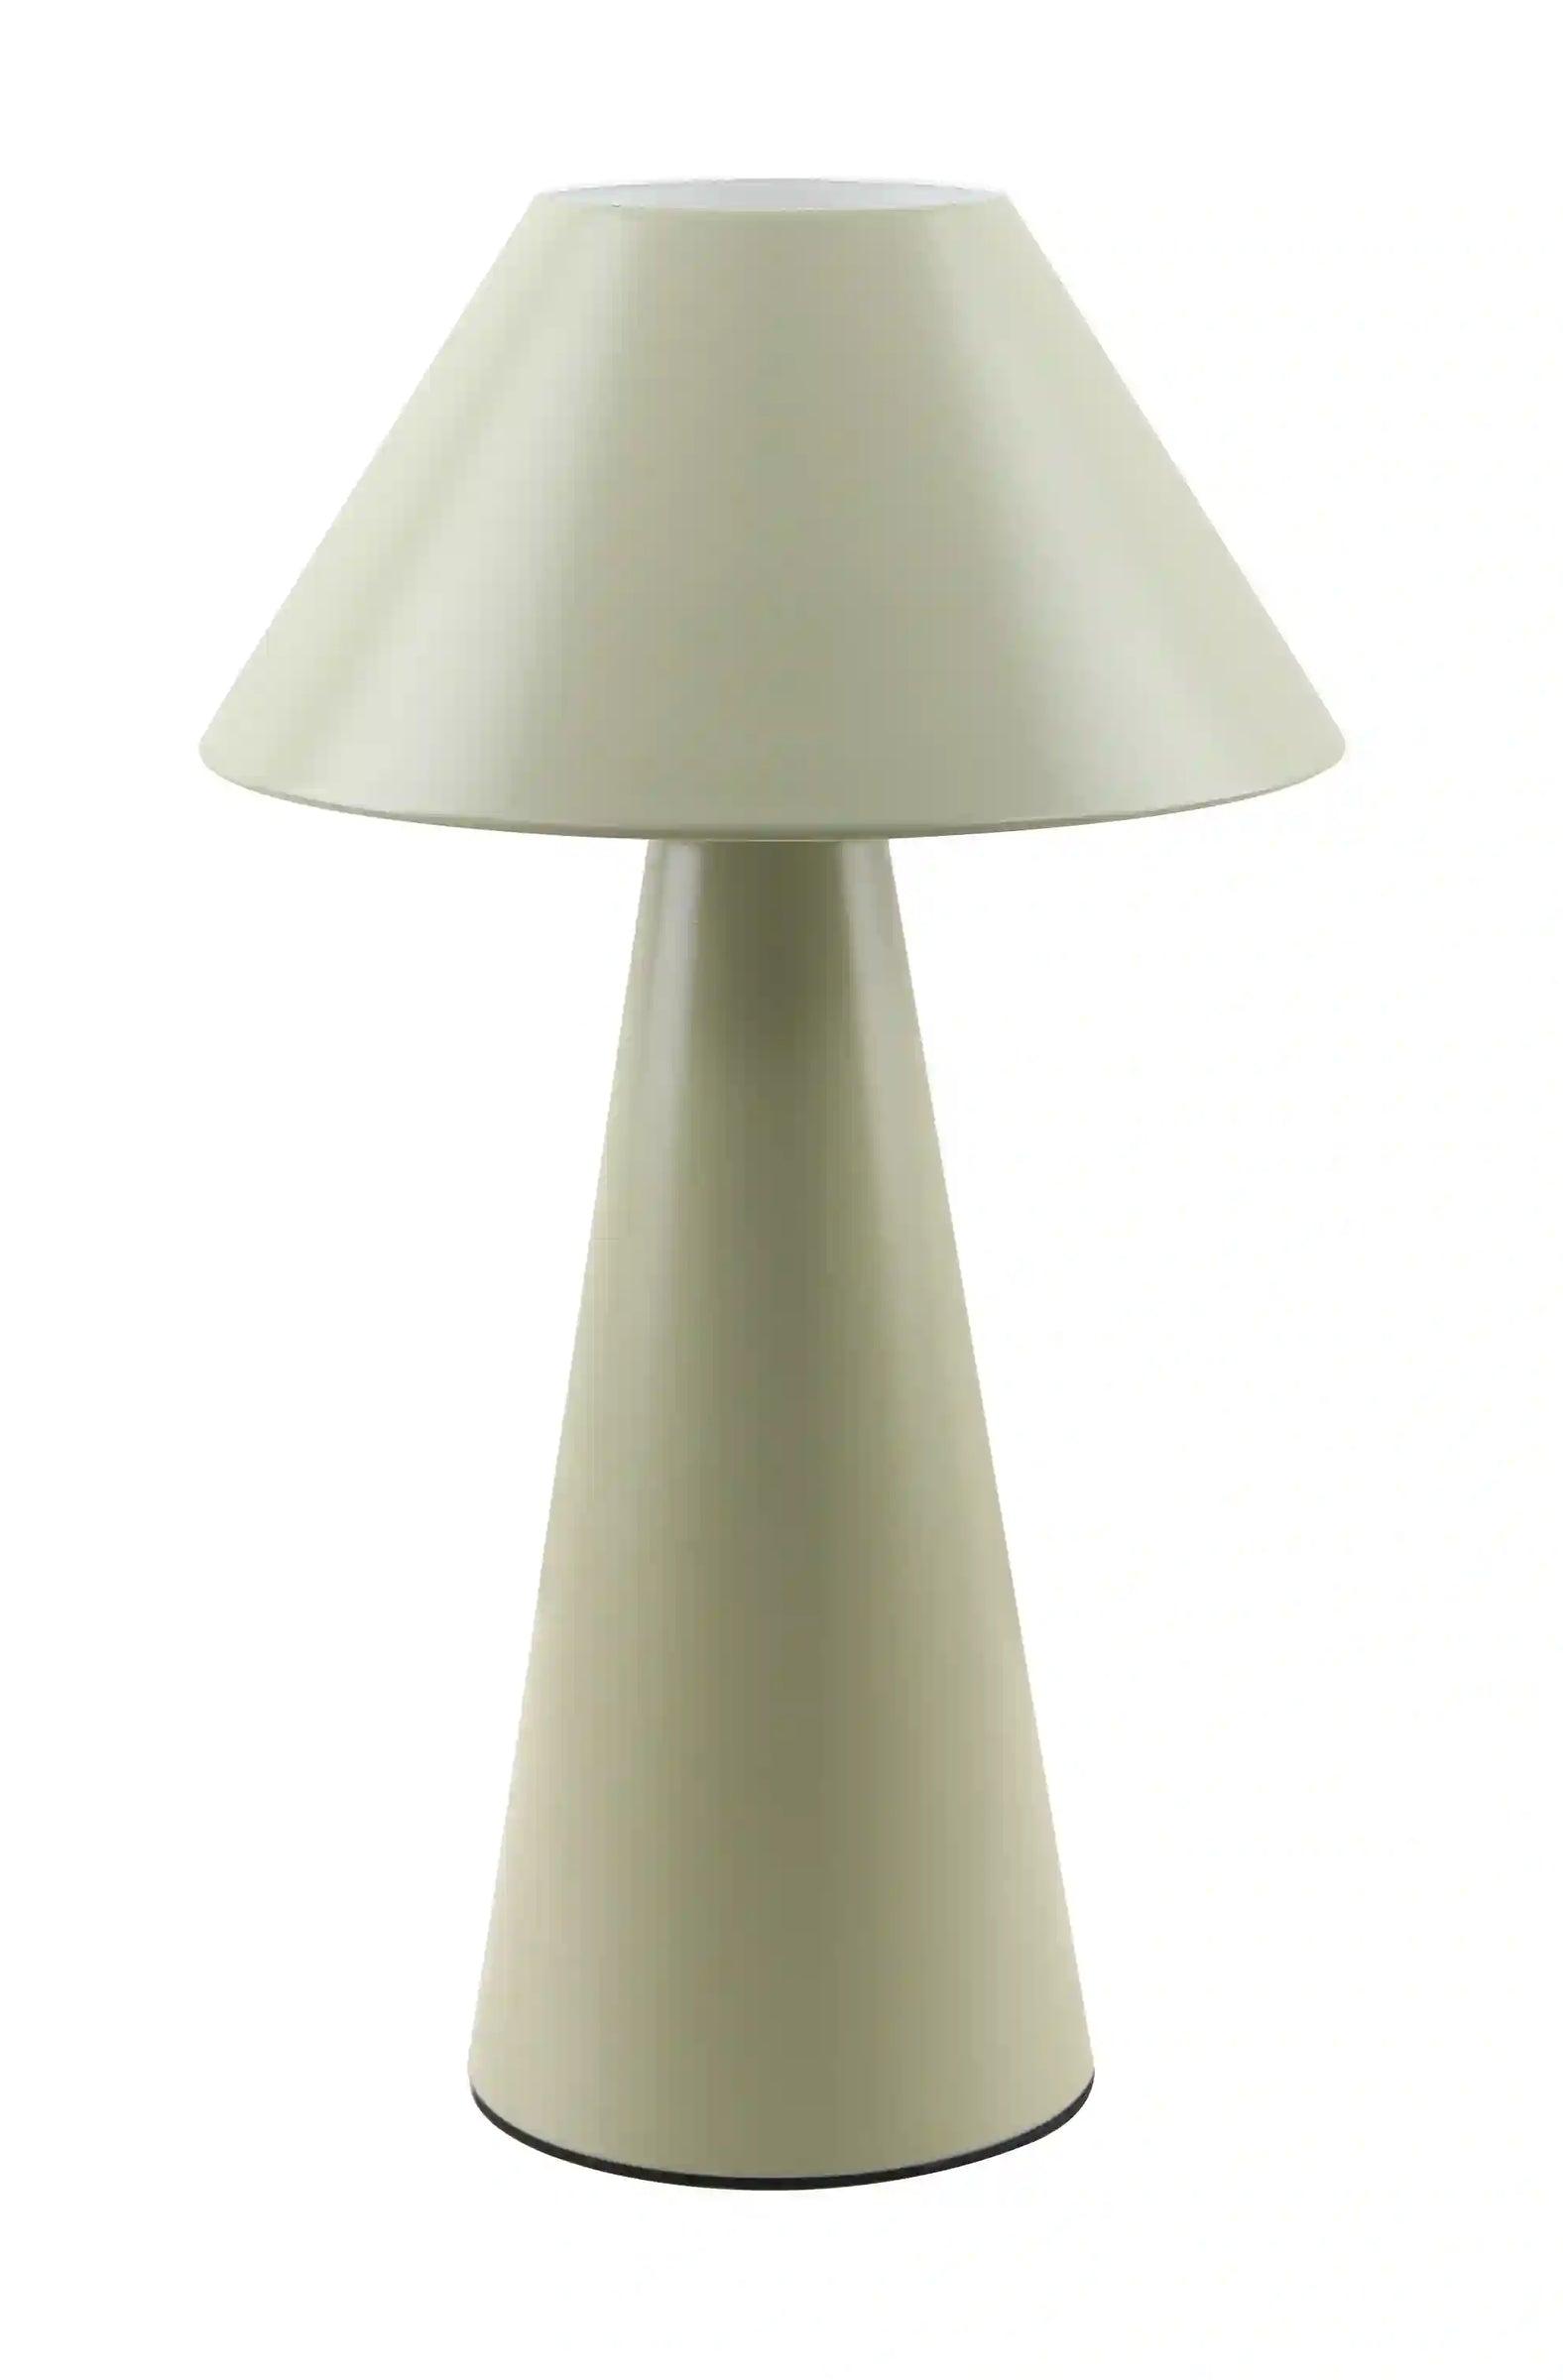 Selected image for Rea Light Daphne HN2504B-452 Stona lampa, E27, 25W, Ø20cm, Svetlozelena